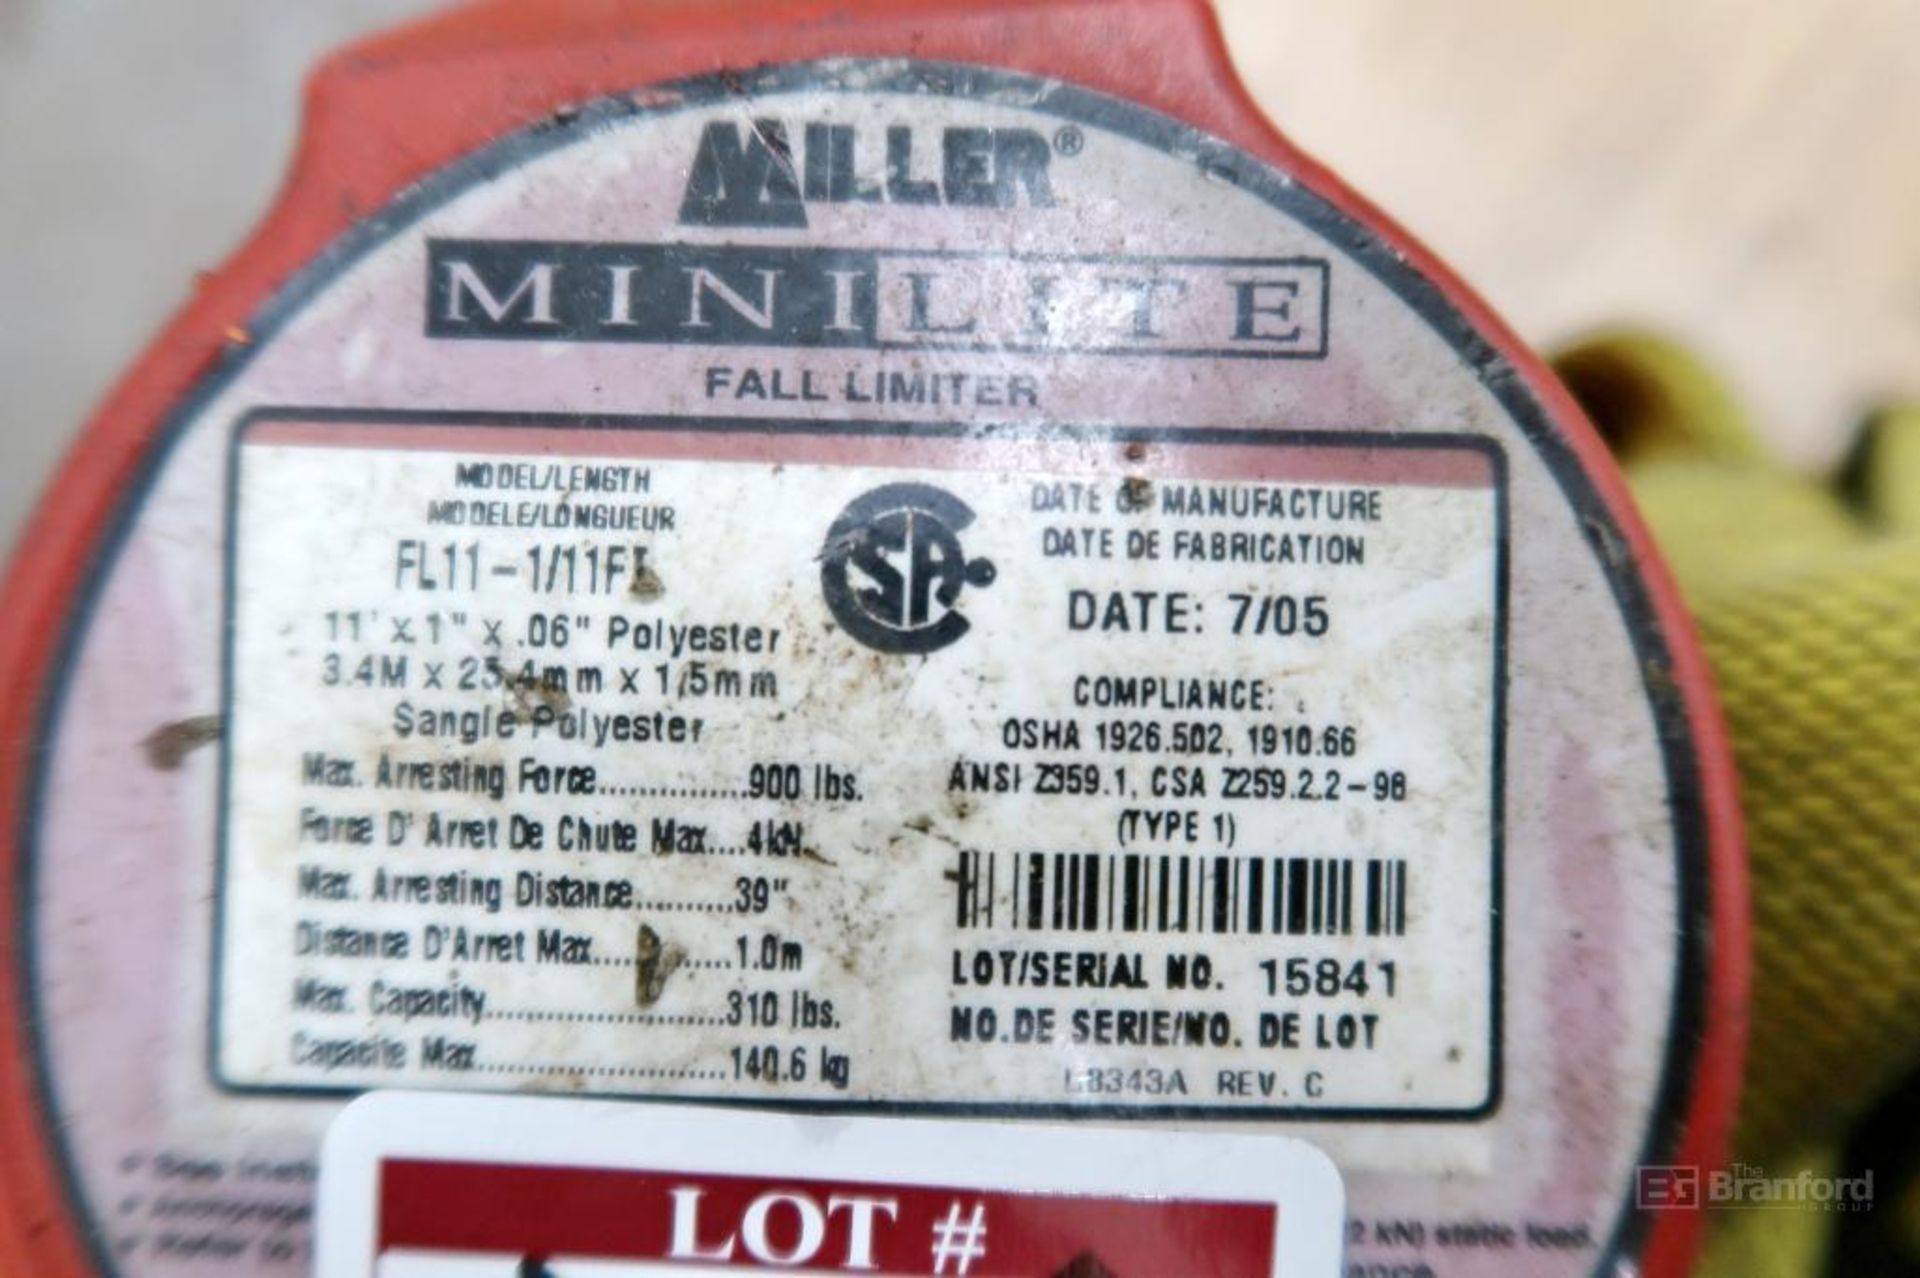 Miller Minilite Fall Limiter Model FL11-1/11FI - Image 2 of 2